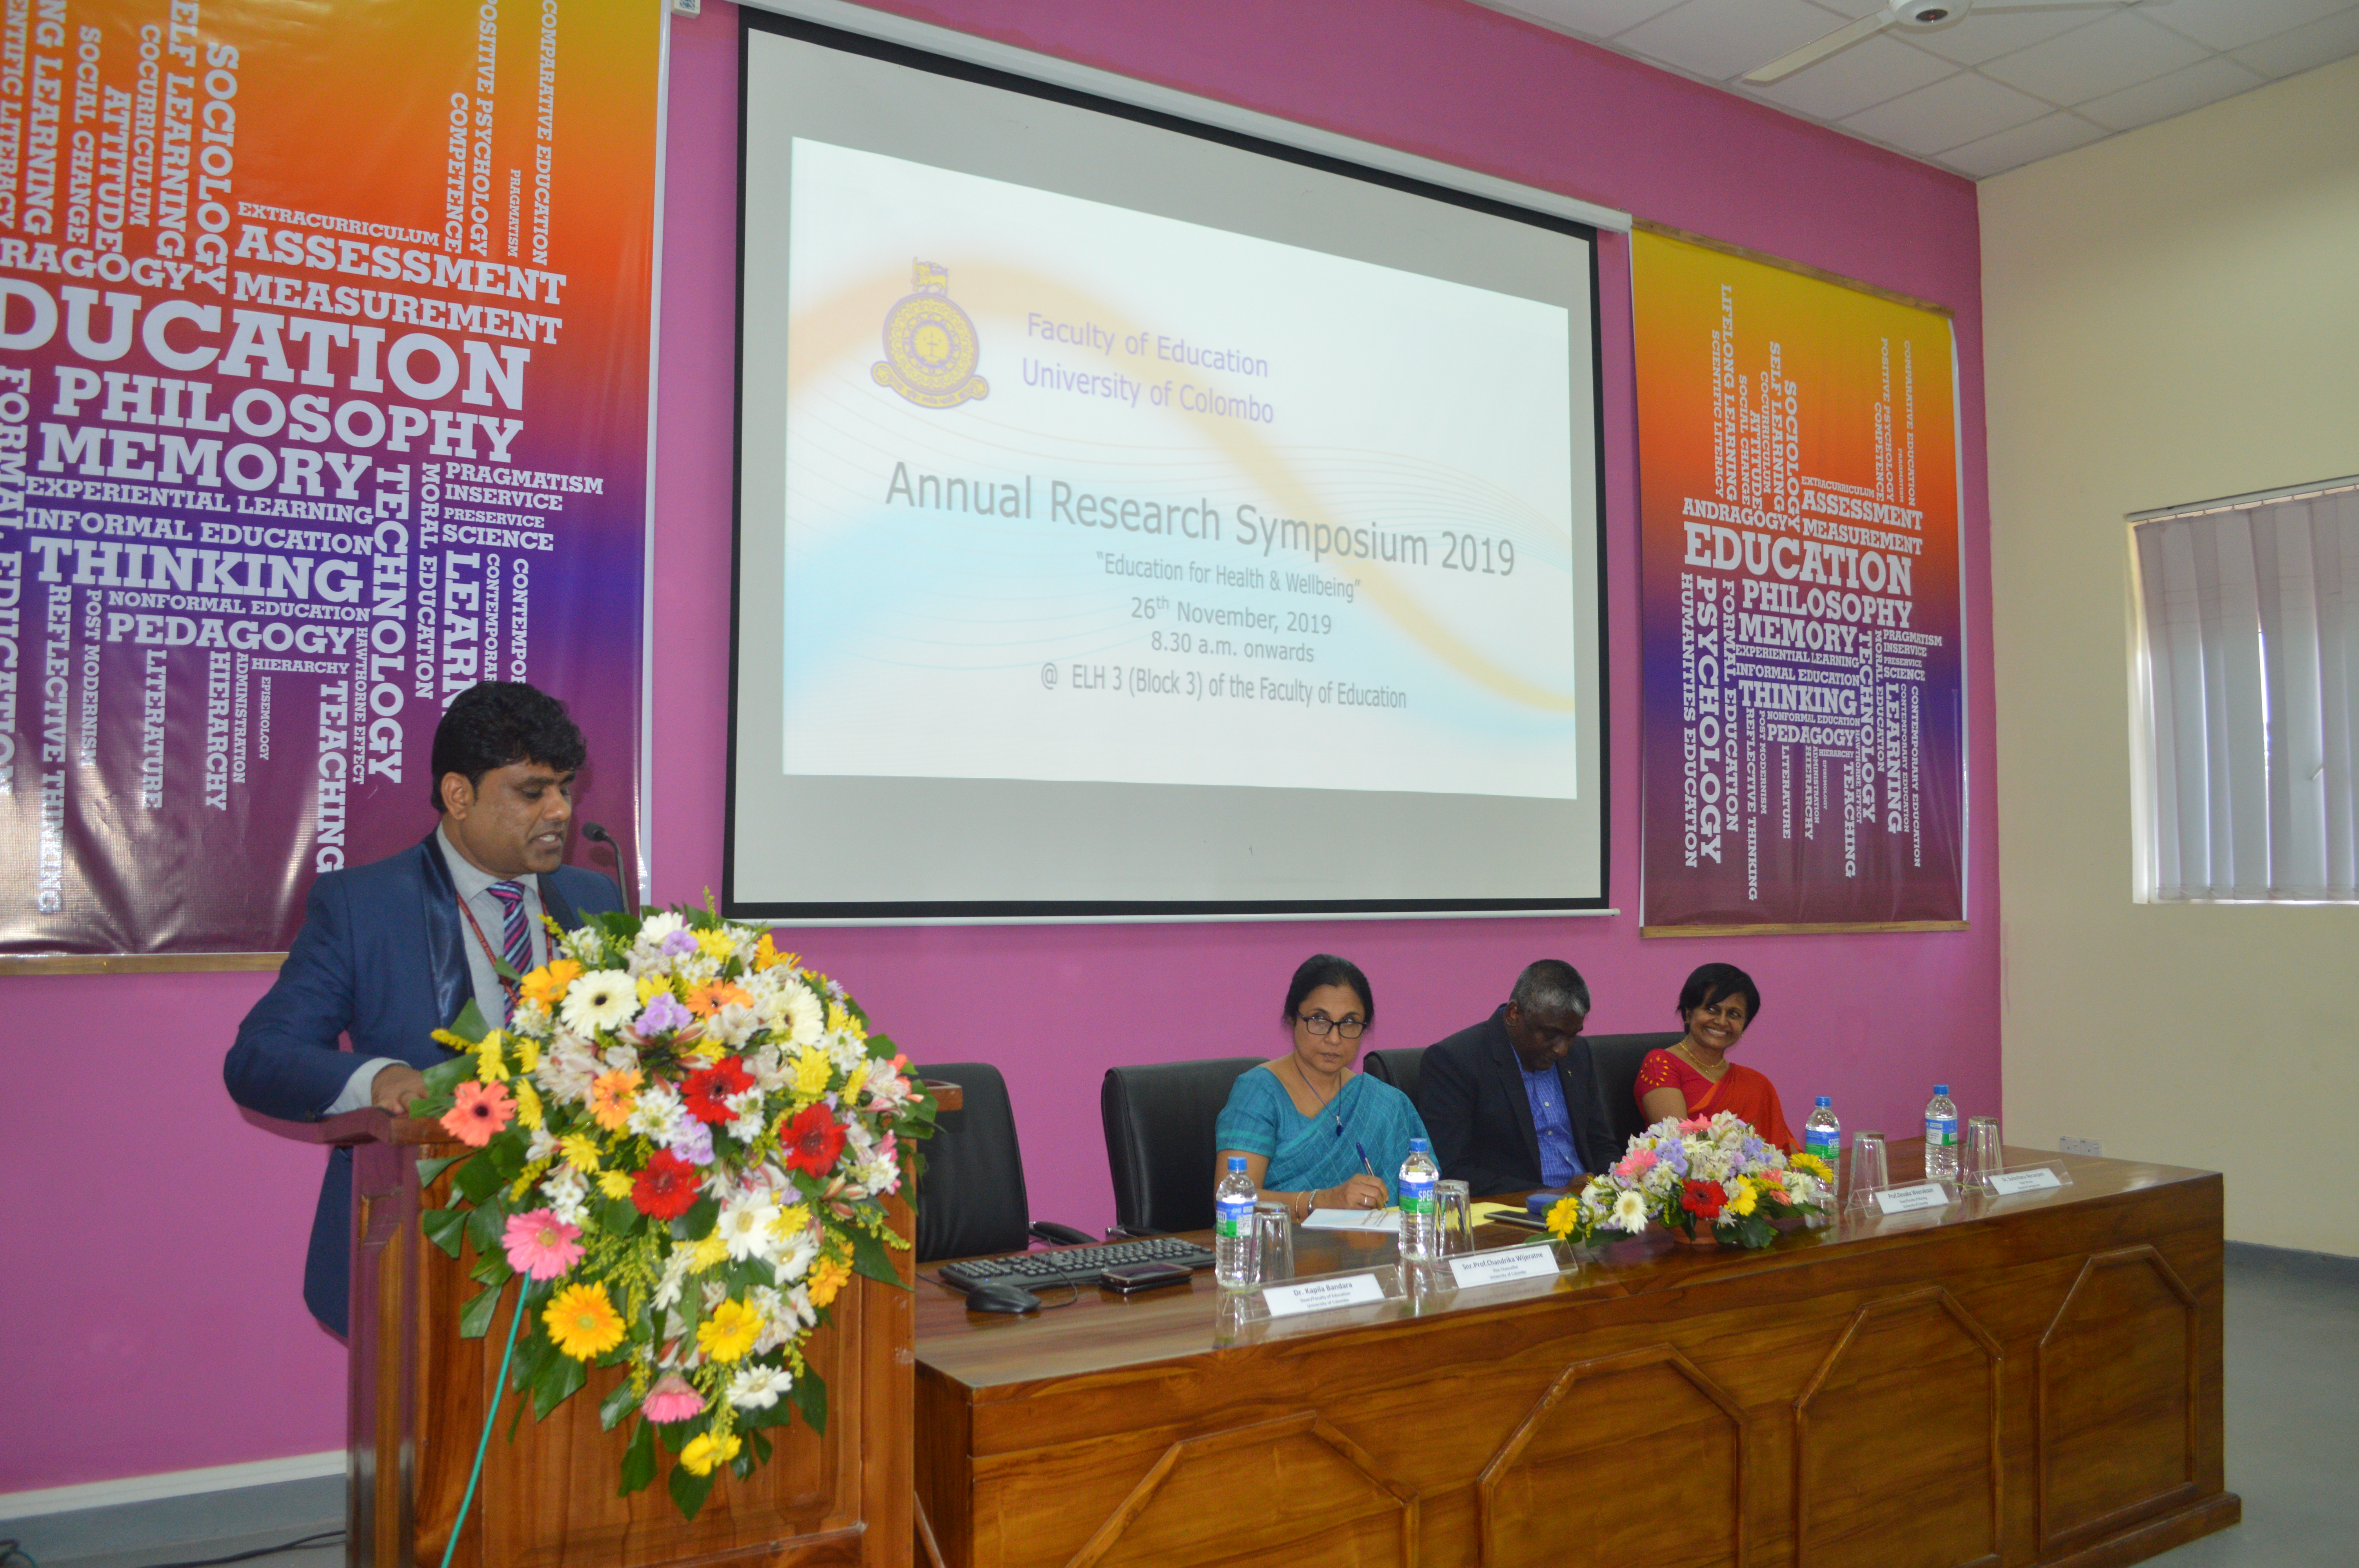 Annual Research Symposium 2019